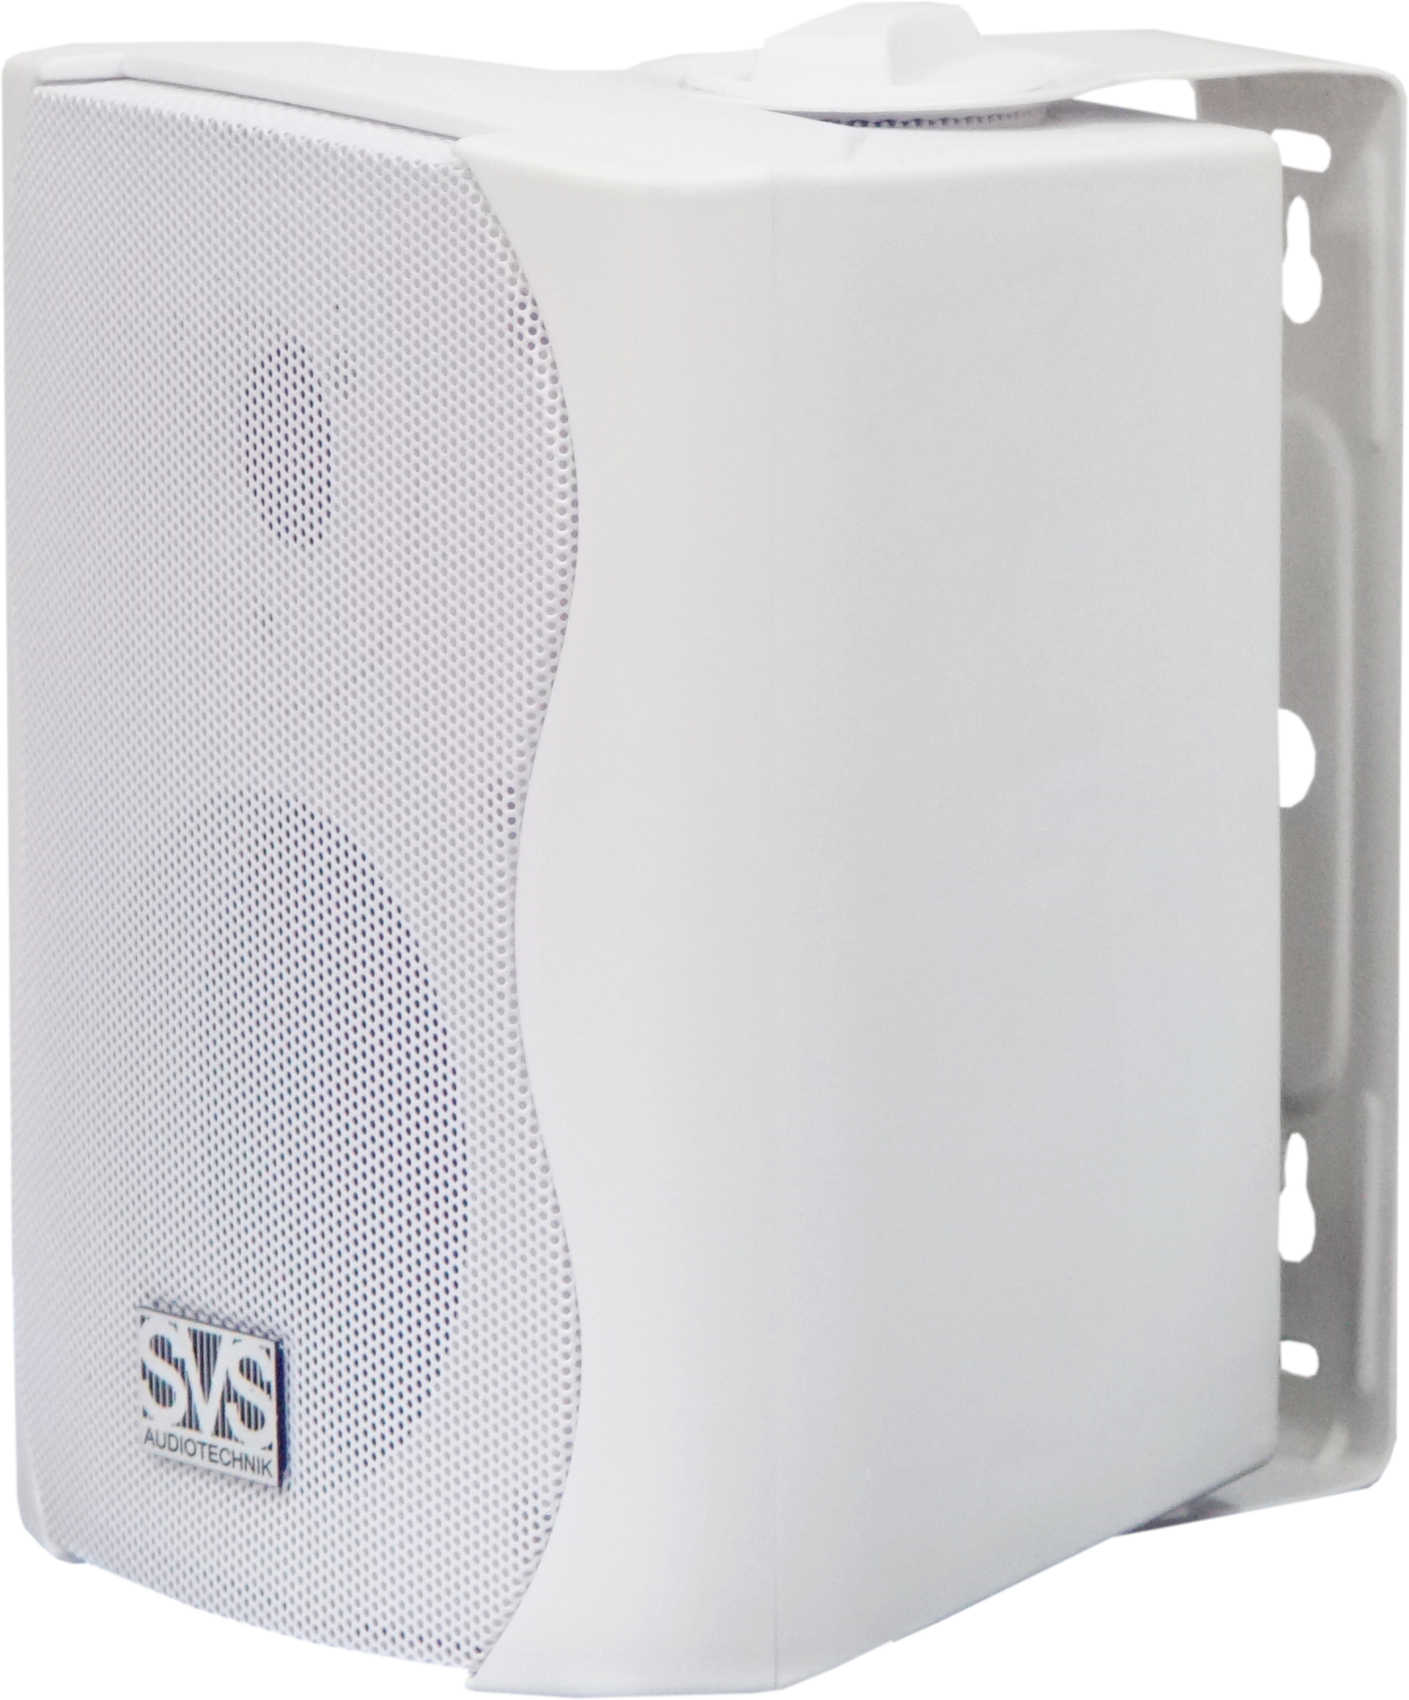 SVS Audiotechnik WS-20 White - фото 2